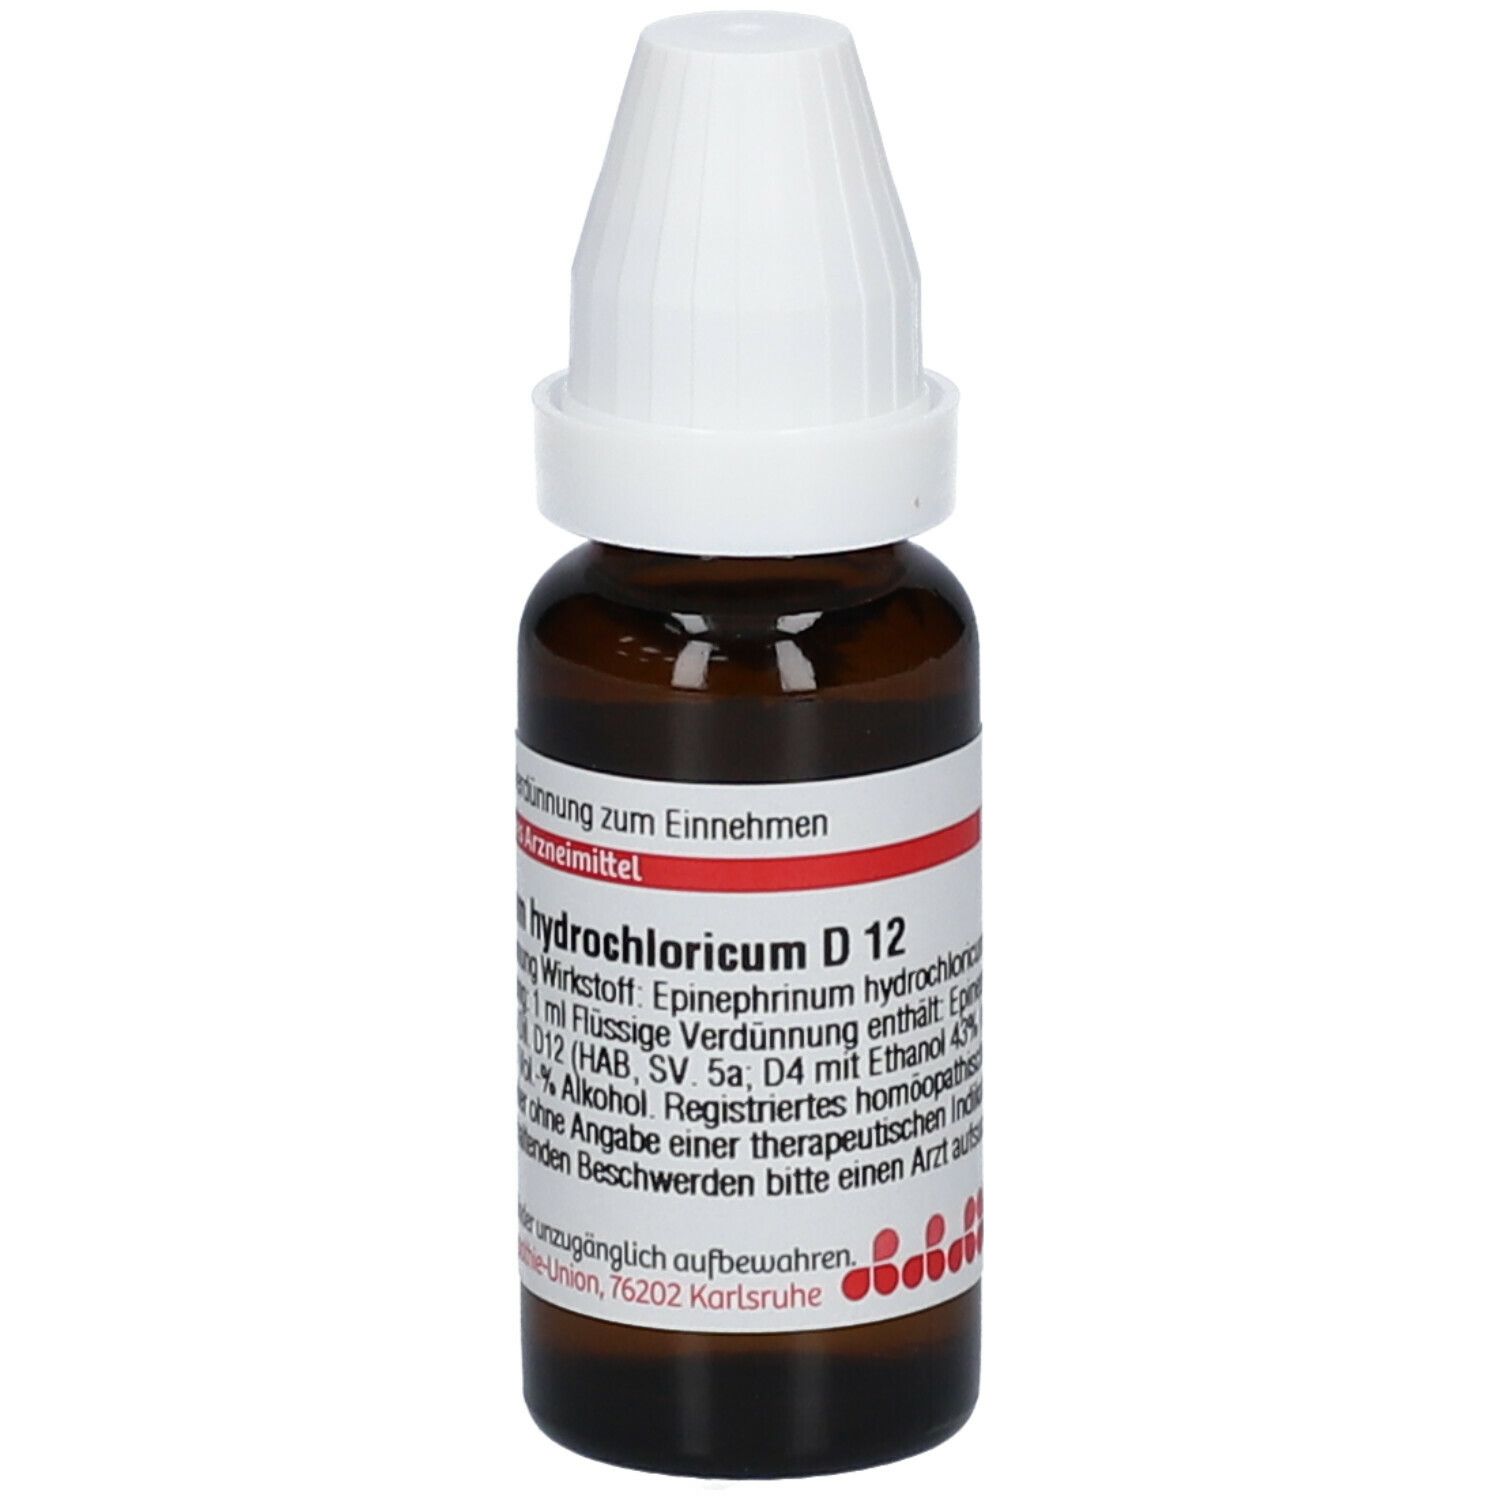 DHU Adrenalinum Hydrochloricum D12